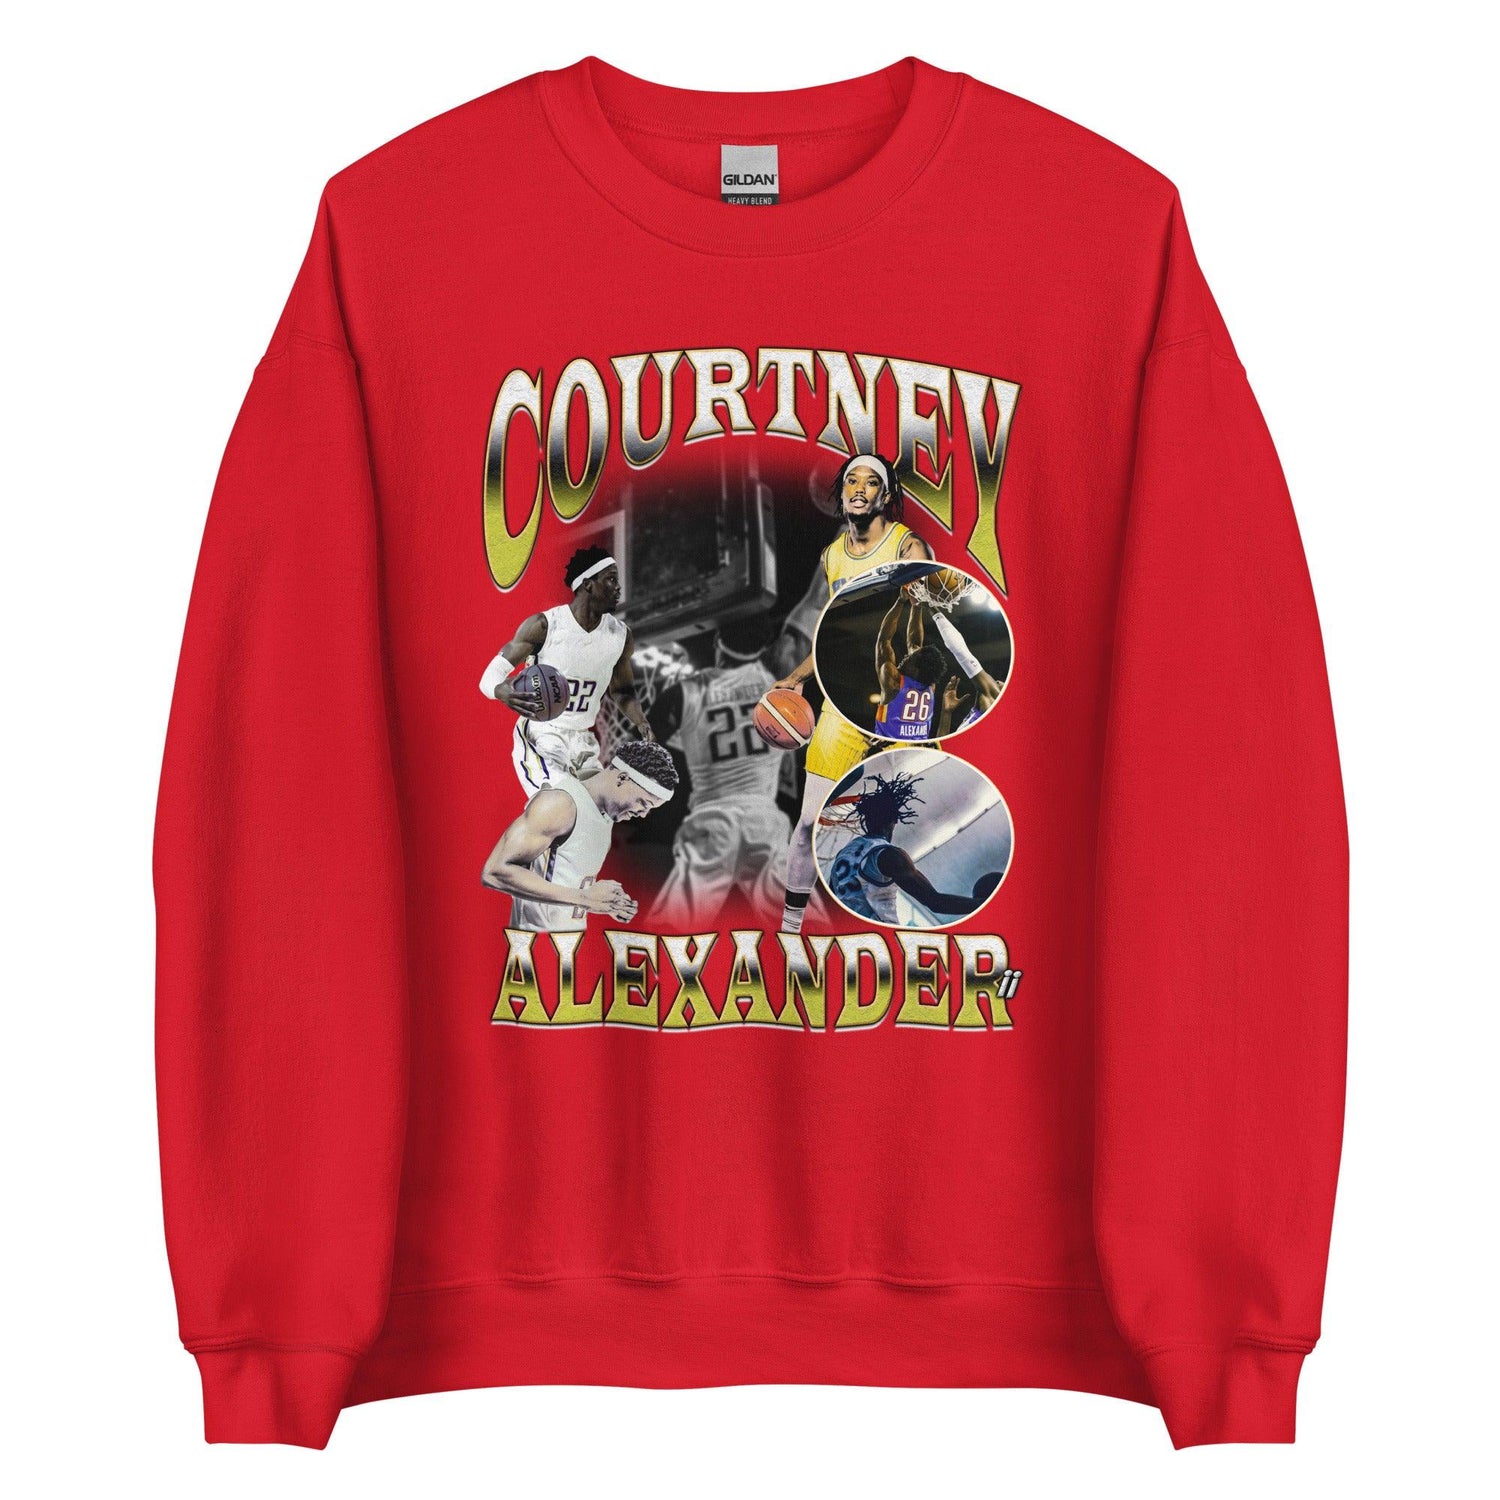 Courtney Alexander "Vintage" Sweatshirt - Fan Arch